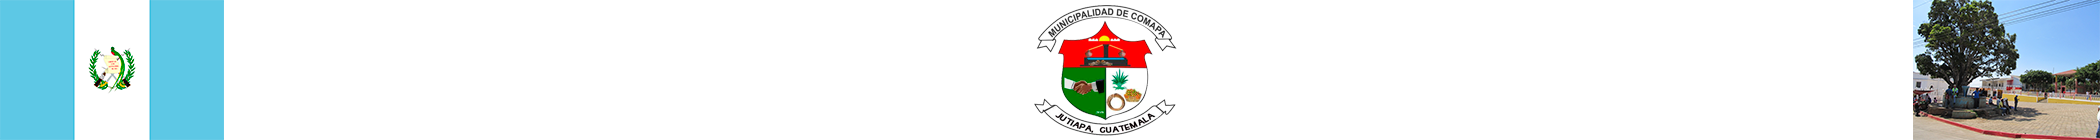 Banner Comapa